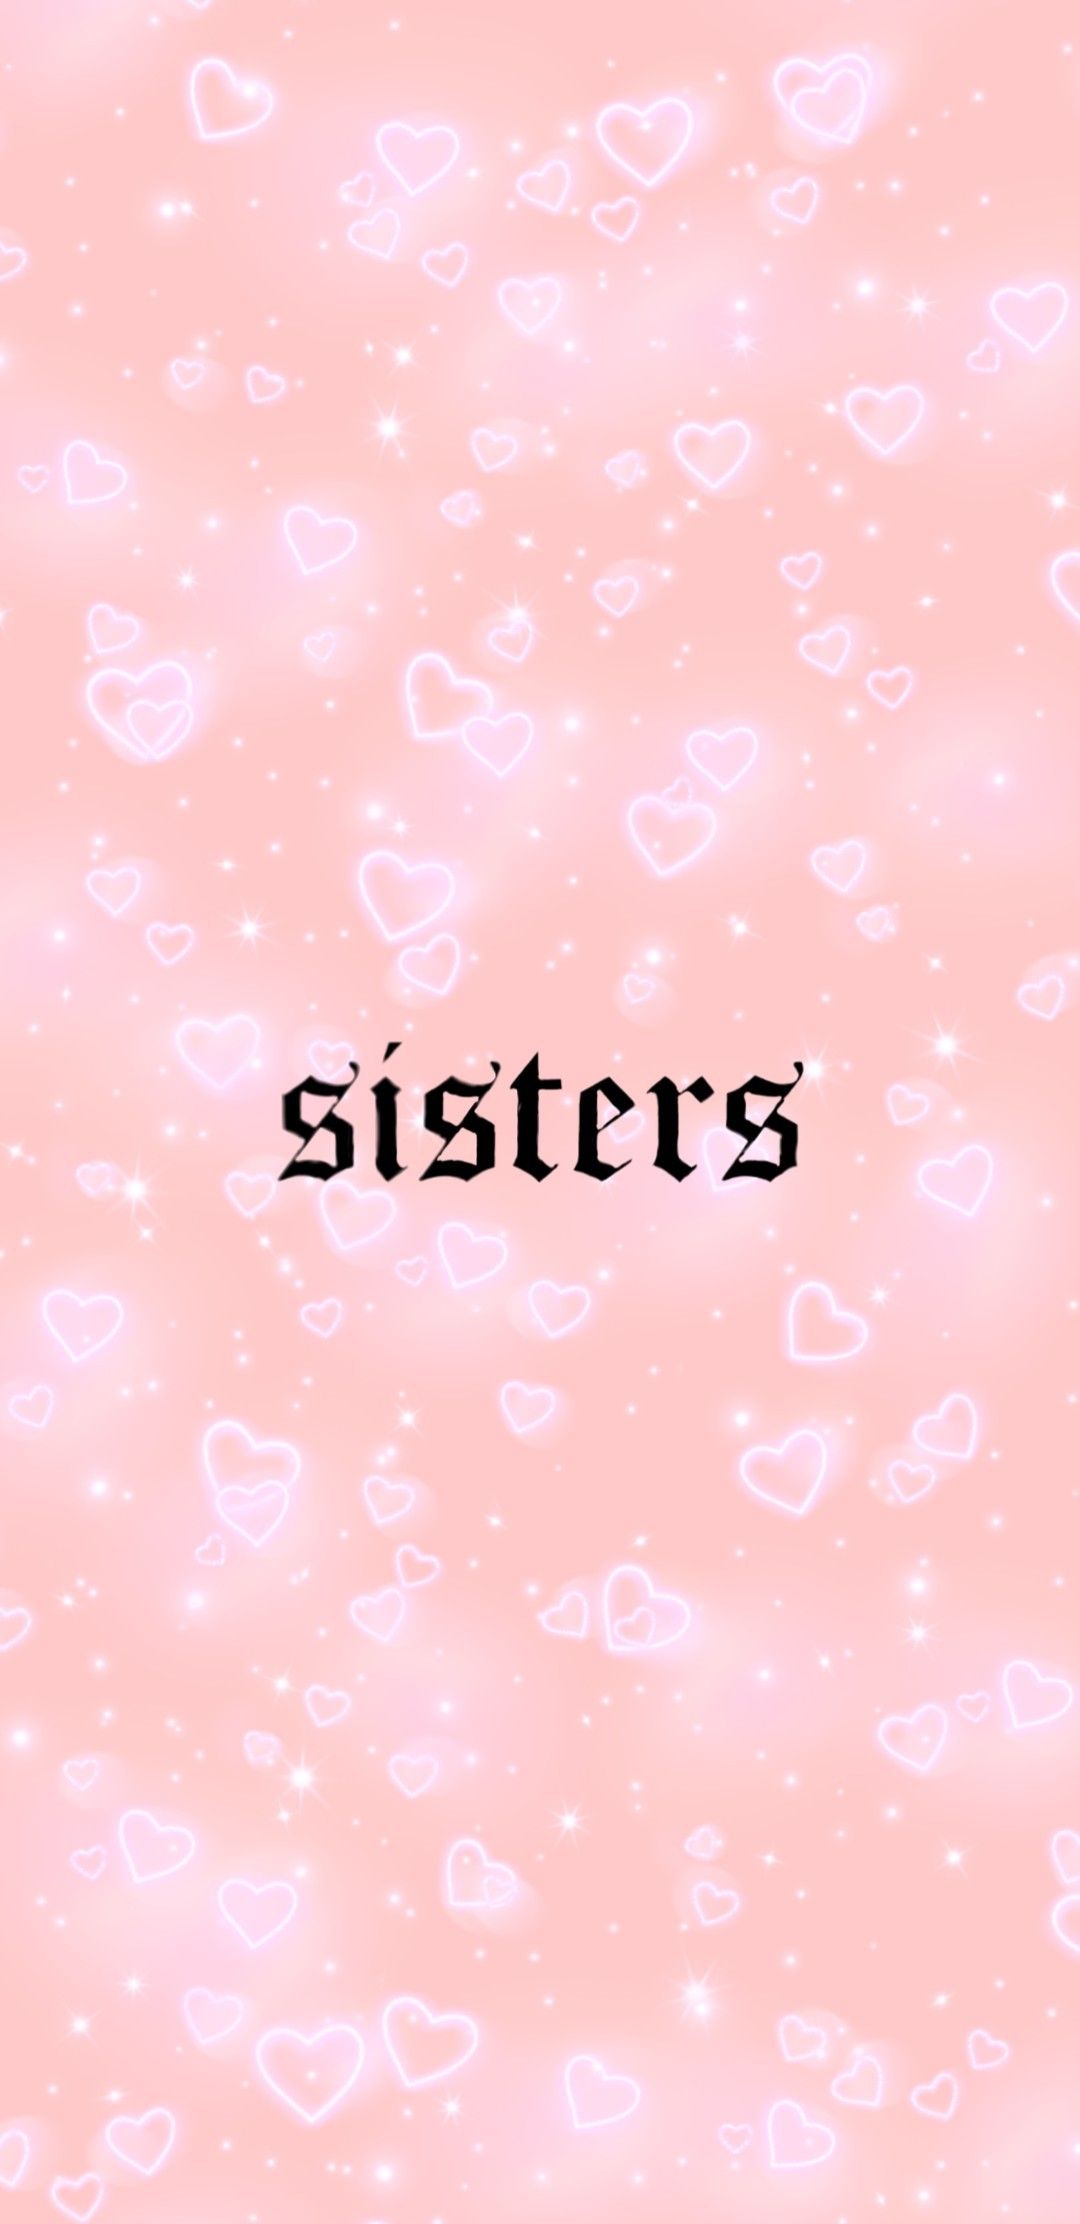 Hi sisters!. Sister wallpaper, Aesthetic iphone wallpaper, Cool background